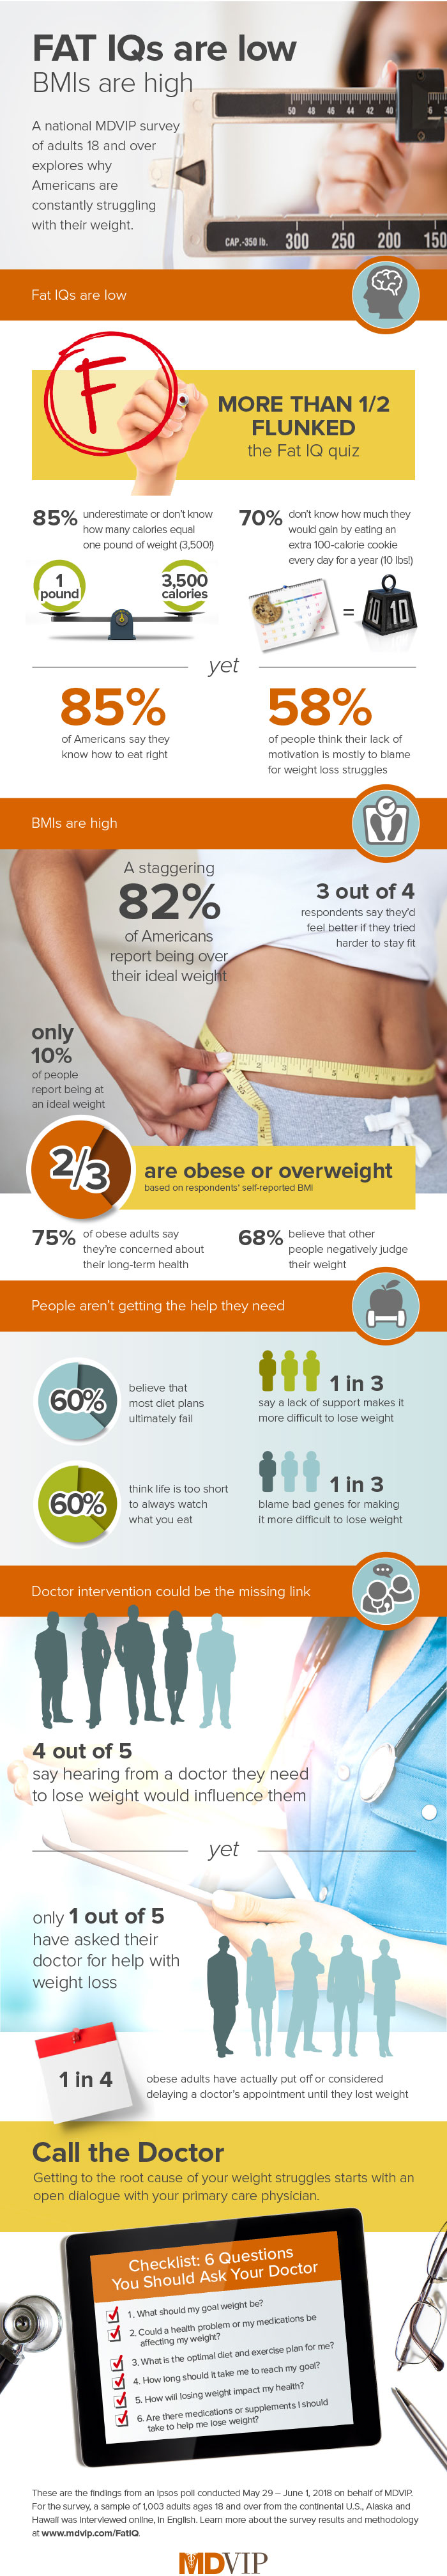 MDVIP Fat IQ Infographic